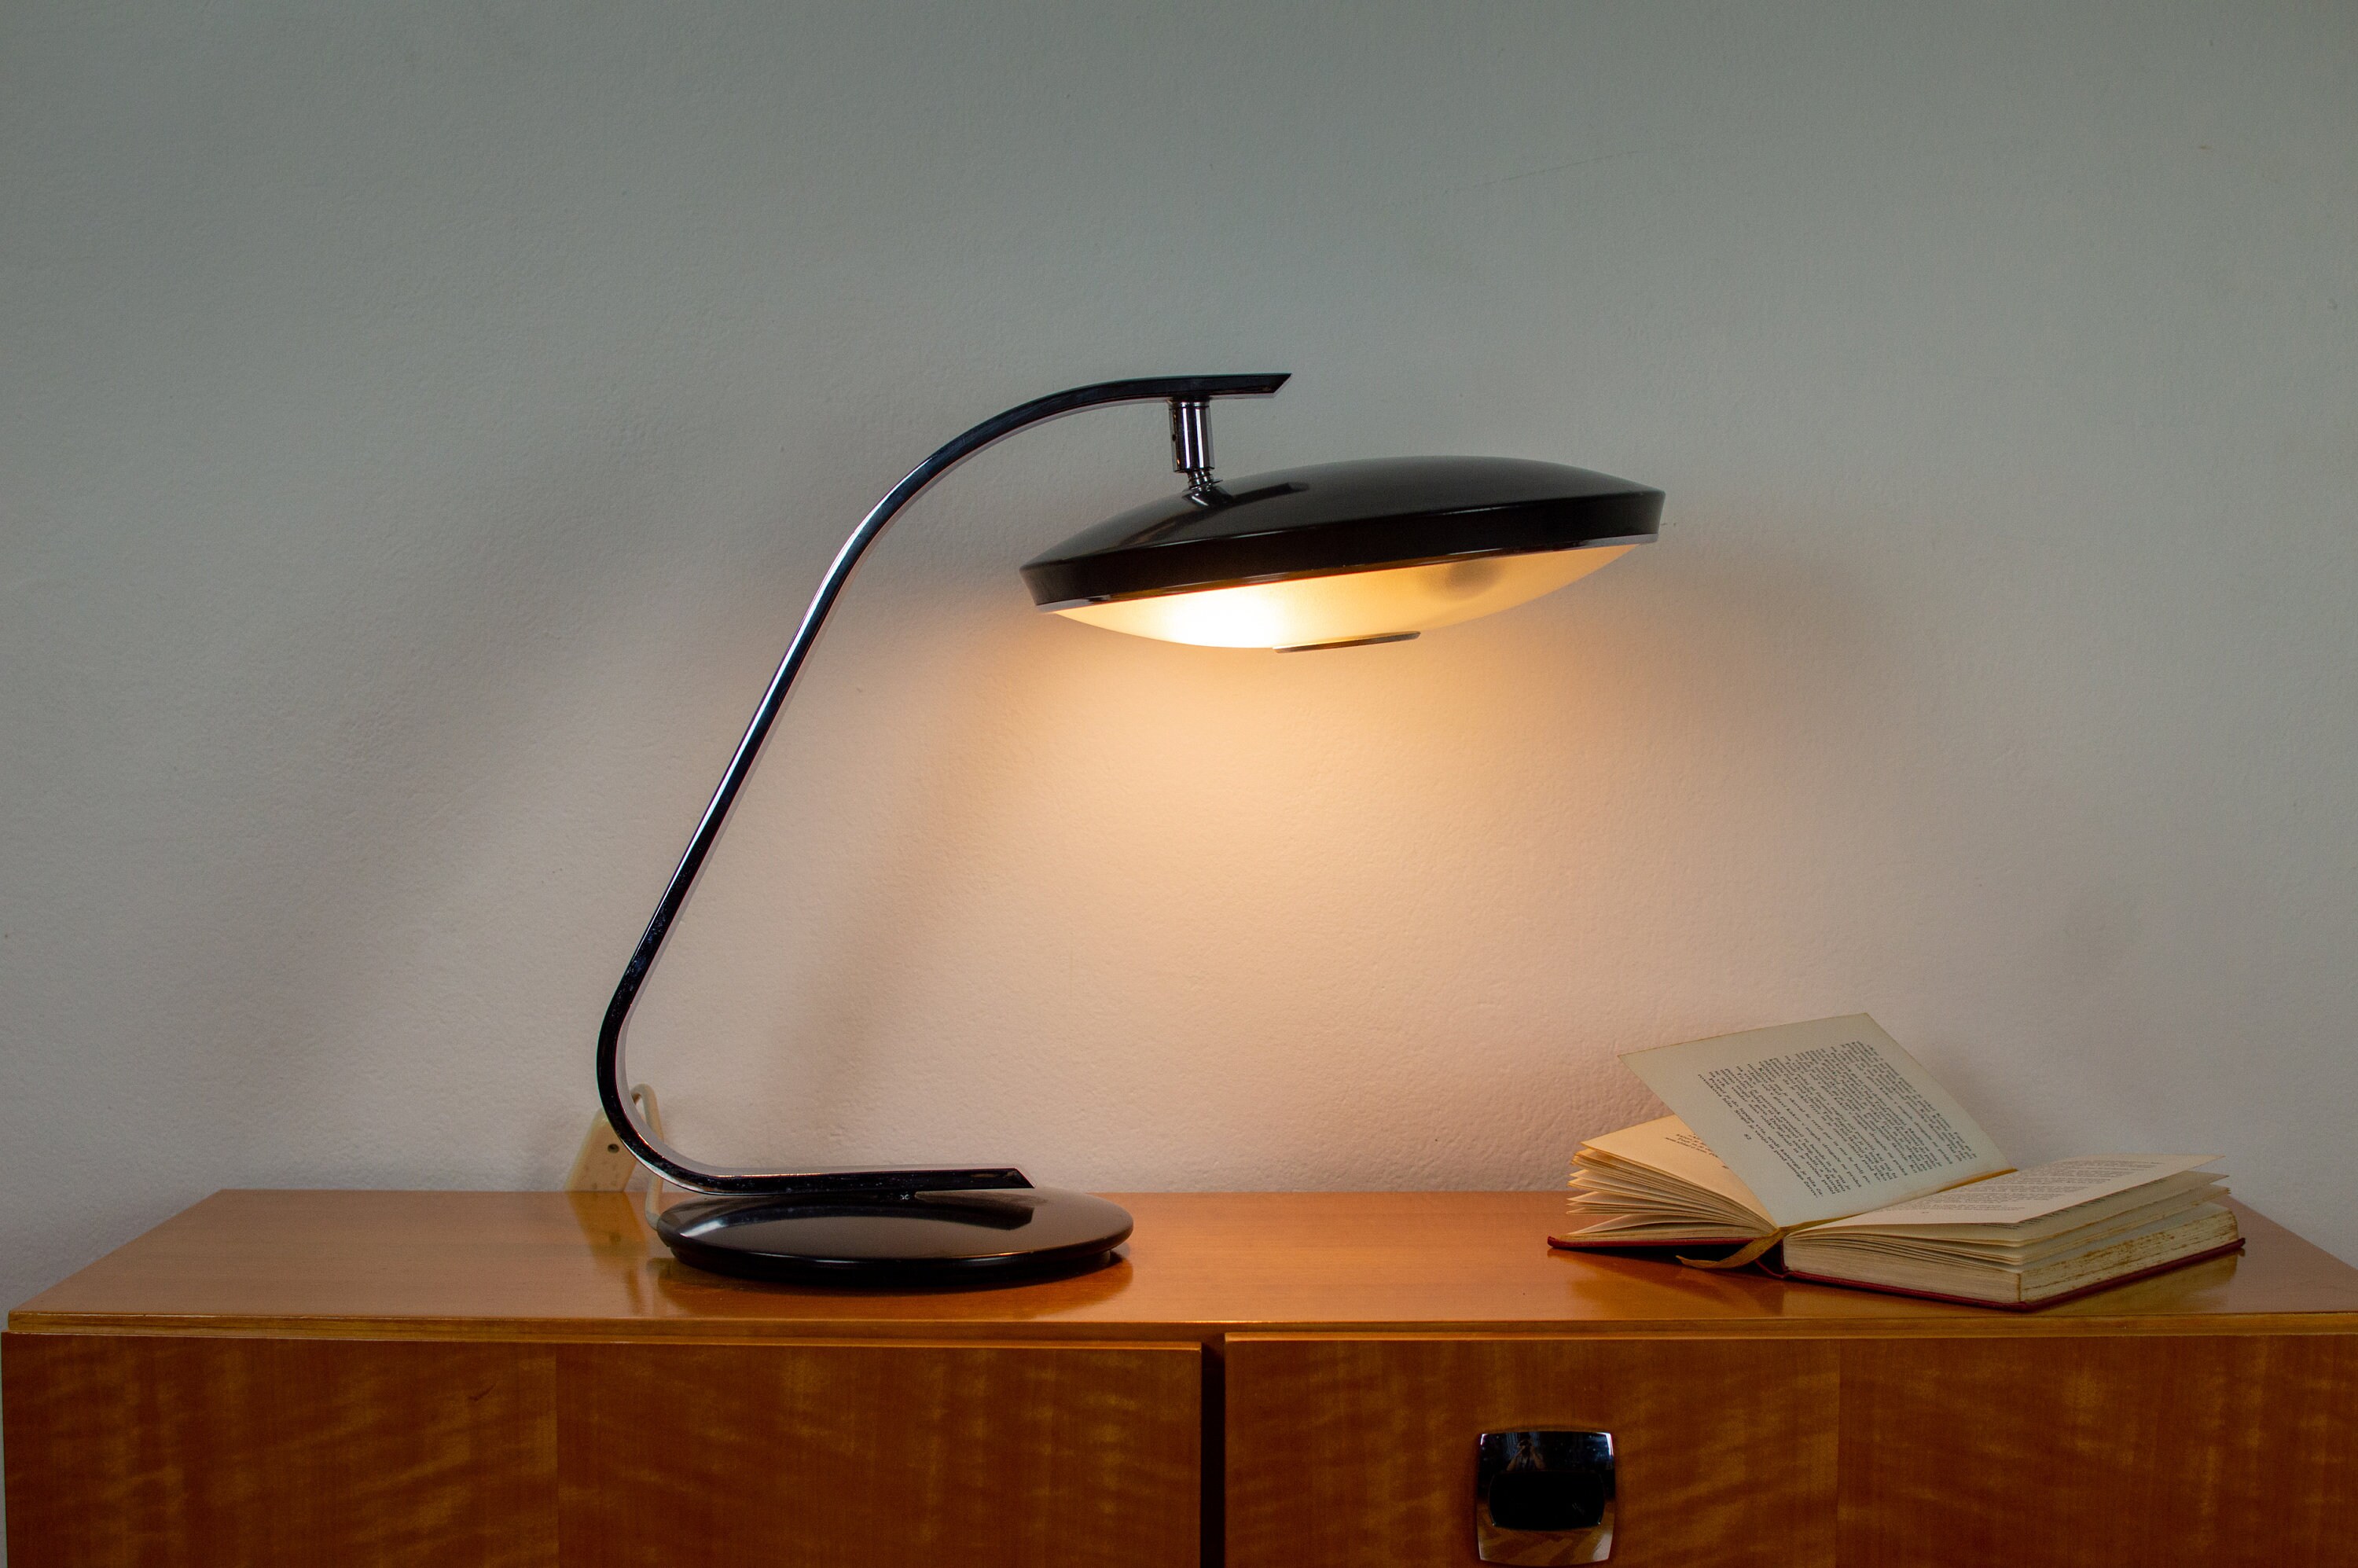 Design by Bruno Gecchelin Mid-century Table Lamp Adjustable Black Lamps Retro Modern Office Lighting 80's Meblo Desk Light